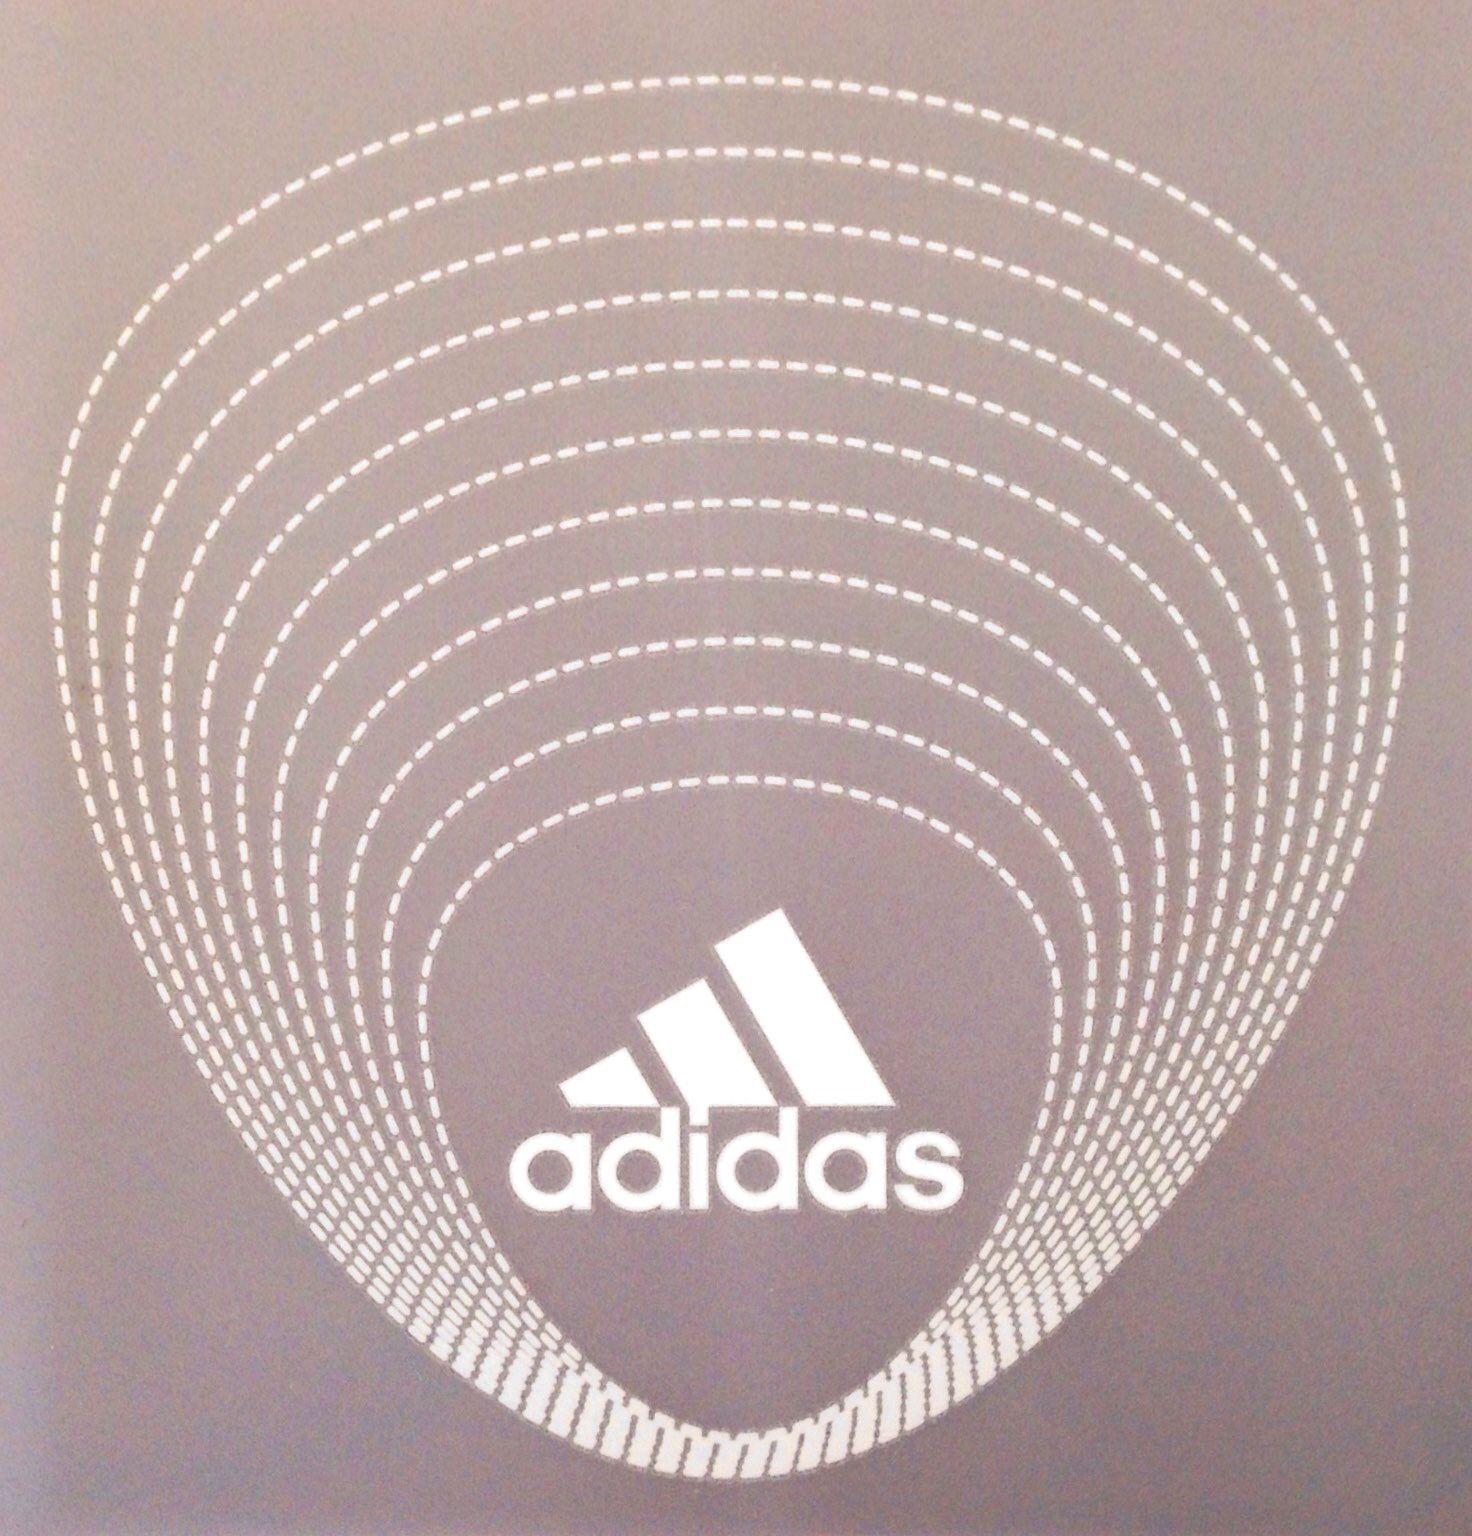 Adidas Soccer Logo - 2010 14 International Football Friendly ADIDAS JUBILANI Official